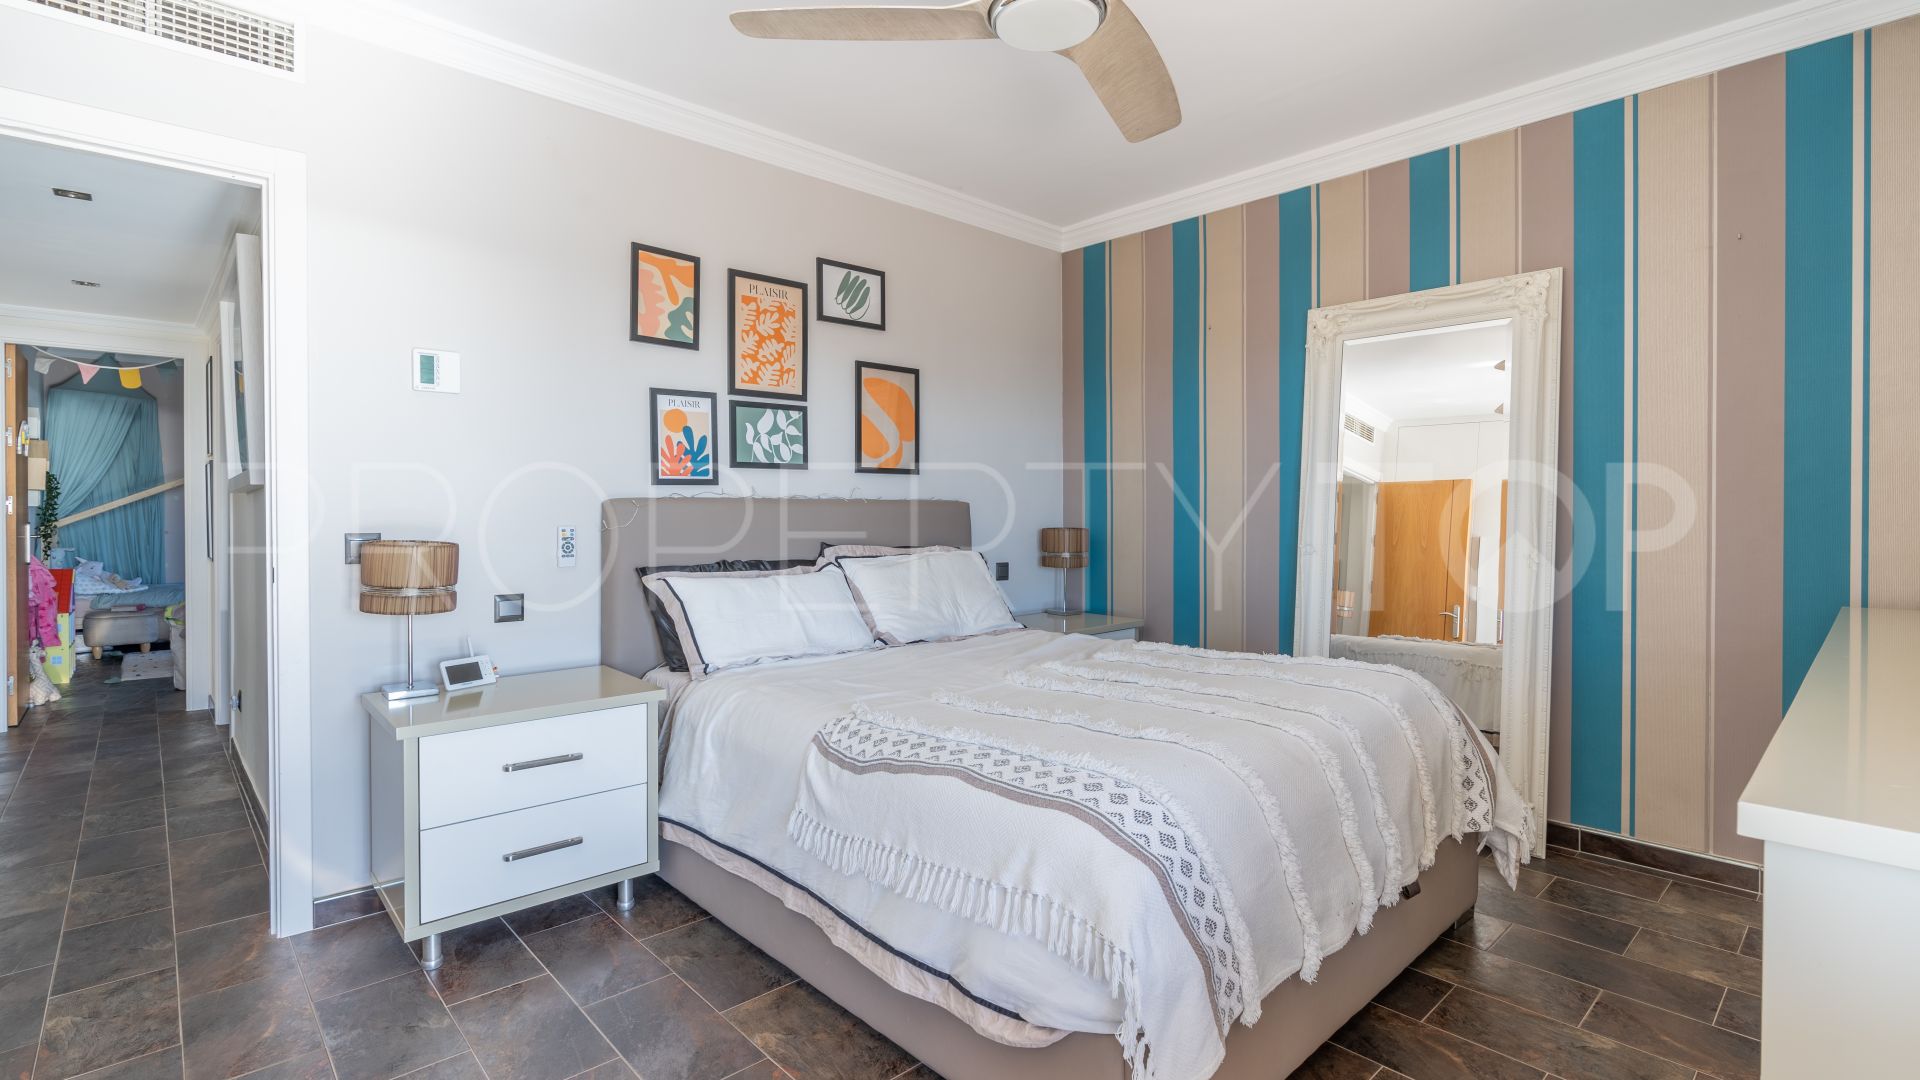 Villa for sale in Puerto Romano with 4 bedrooms